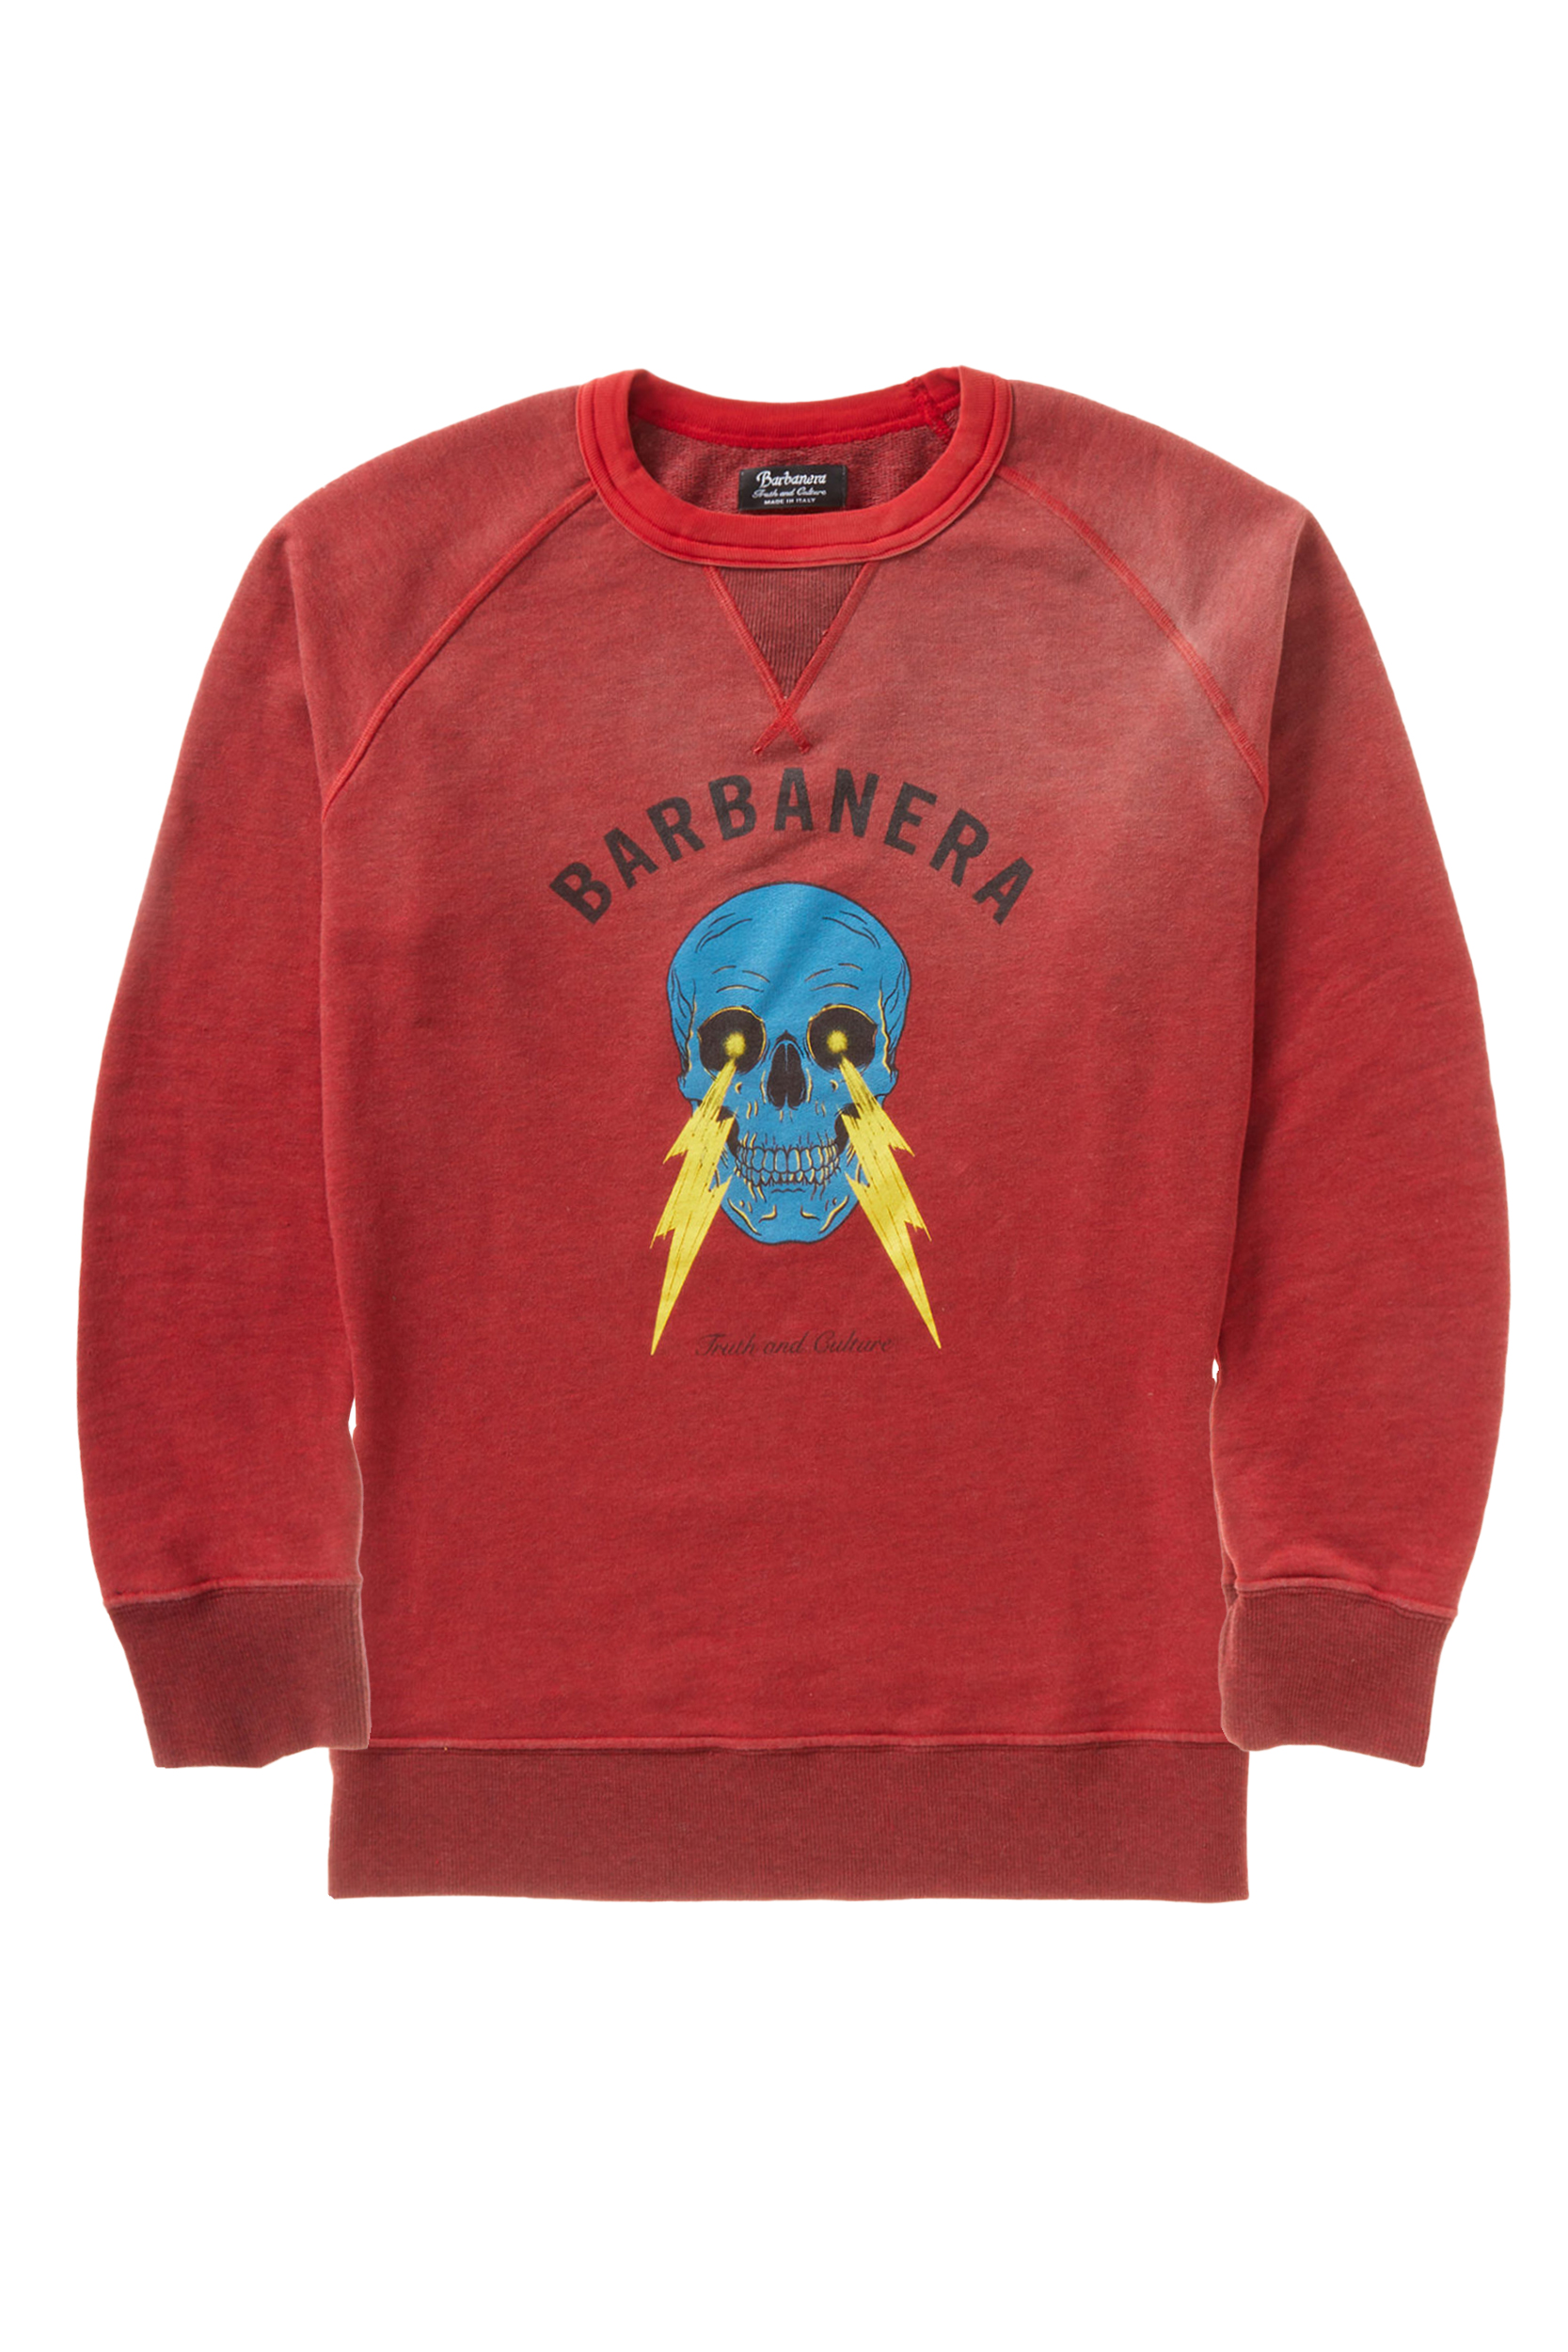 Barbanera Graphic Skull Neck Sweatshirt Cotton Meroni And Red Crew - Bolt Vintage Lightning